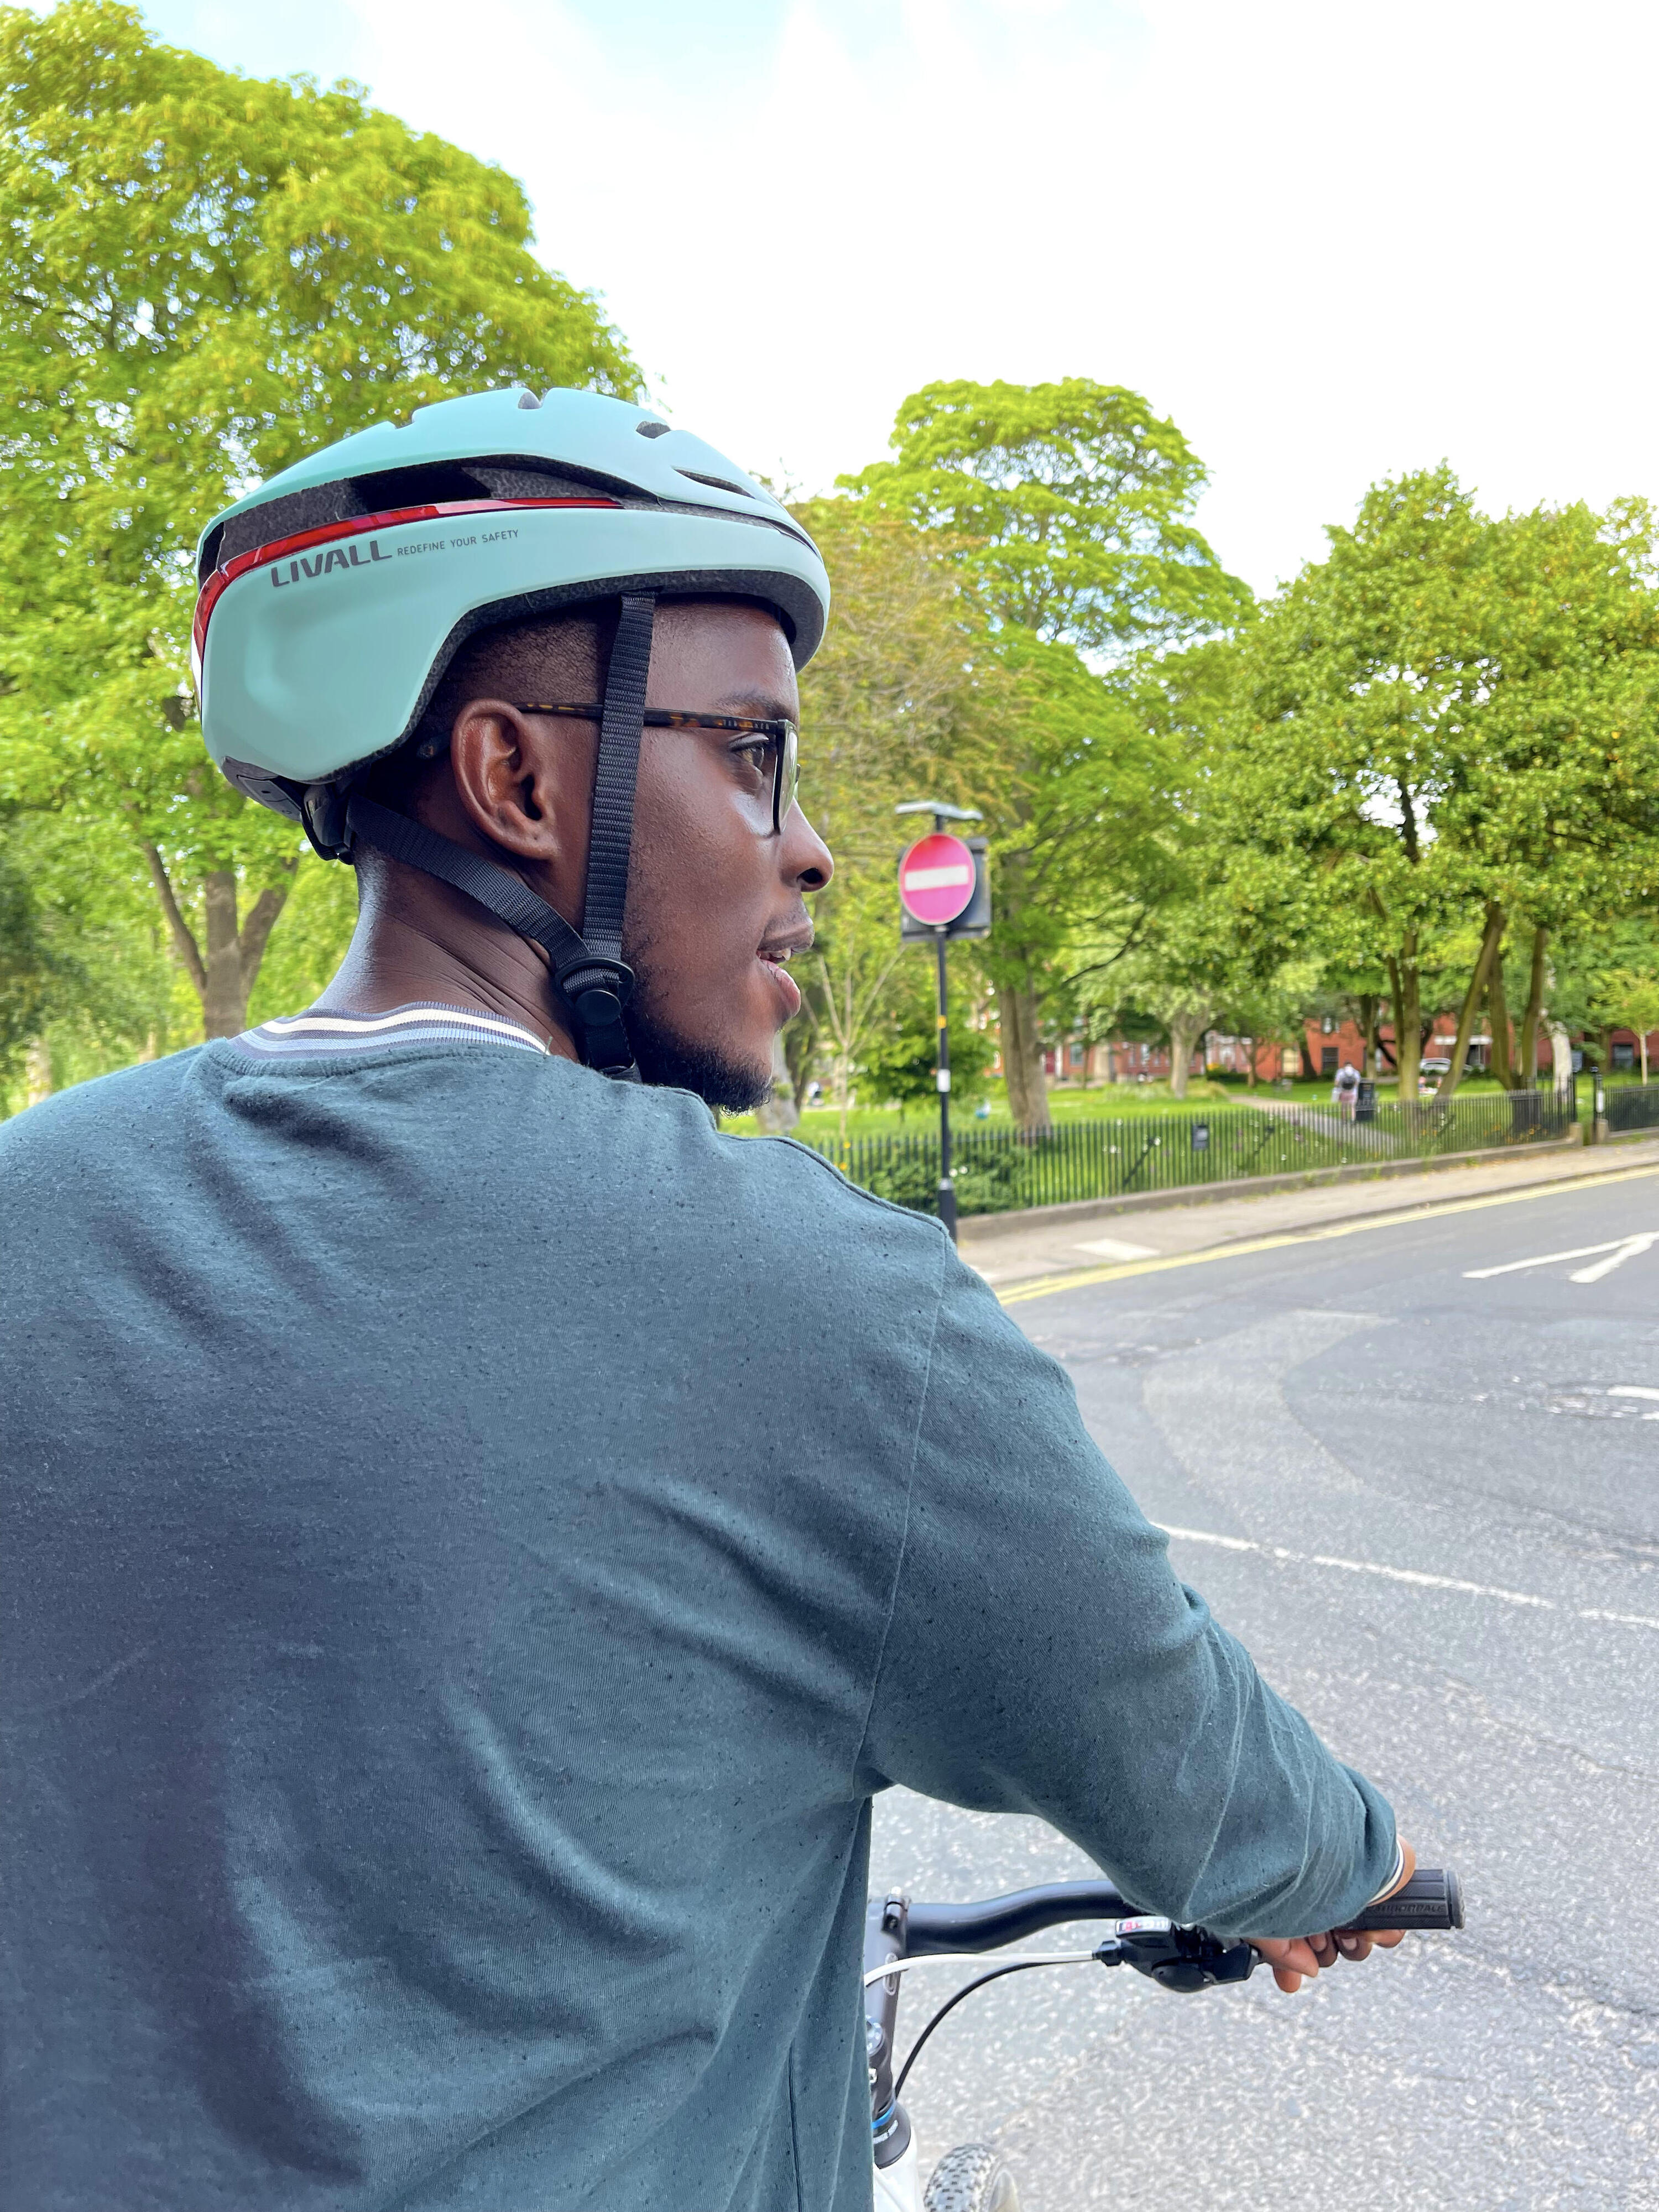 Livall EVO21 Smart Riding Helmet 6/7